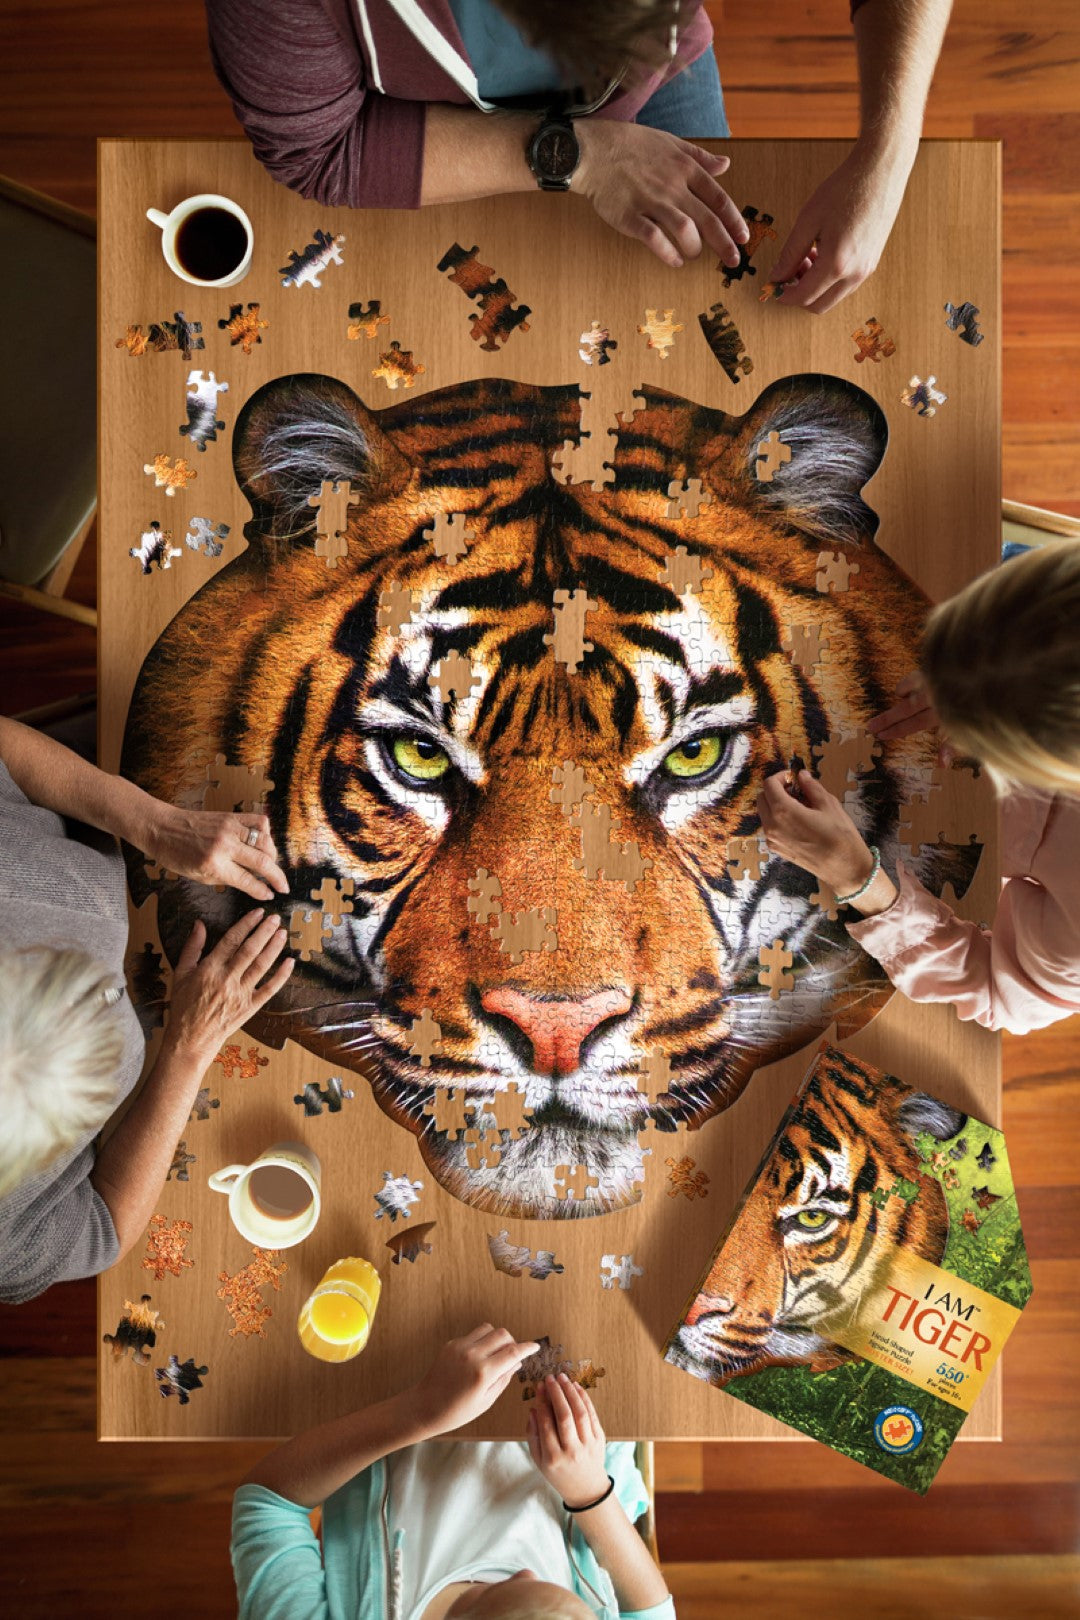 I Am Puzzle Poster Size Tiger 550pcs